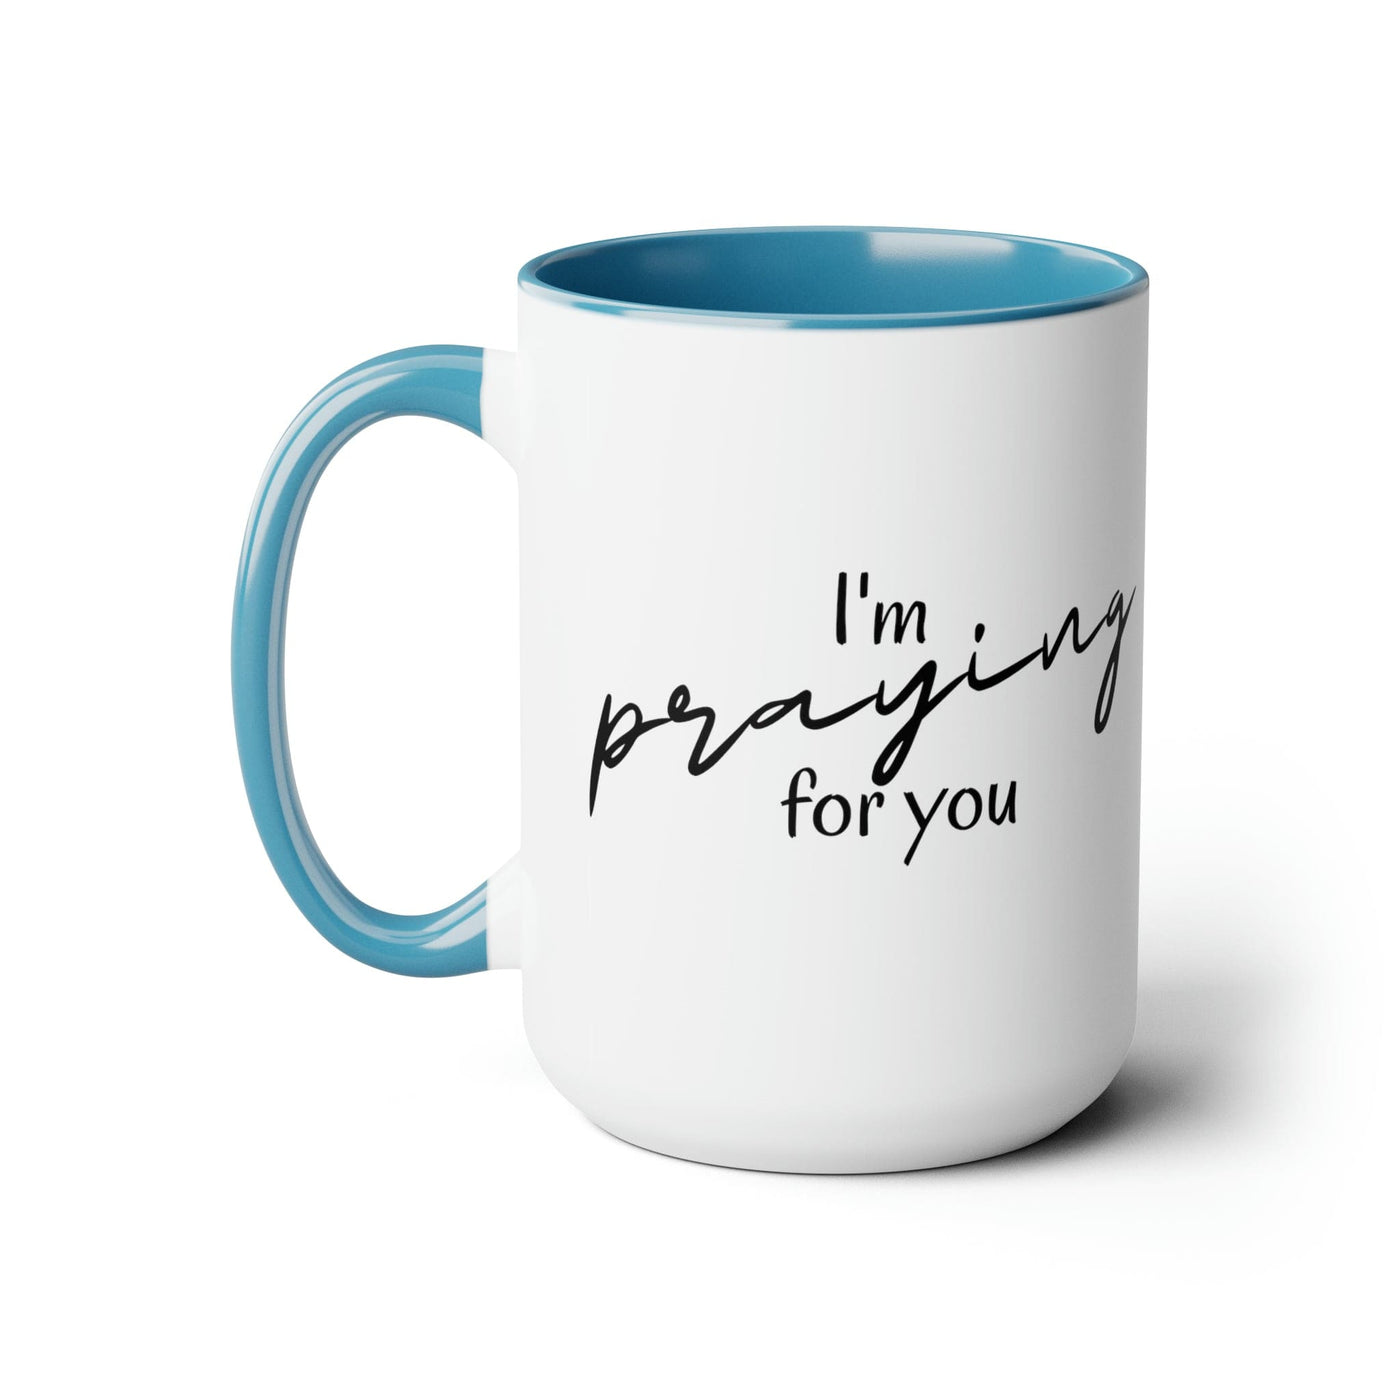 Accent Ceramic Coffee Mug 15oz - Say It Soul I’m Praying For You T-shirt